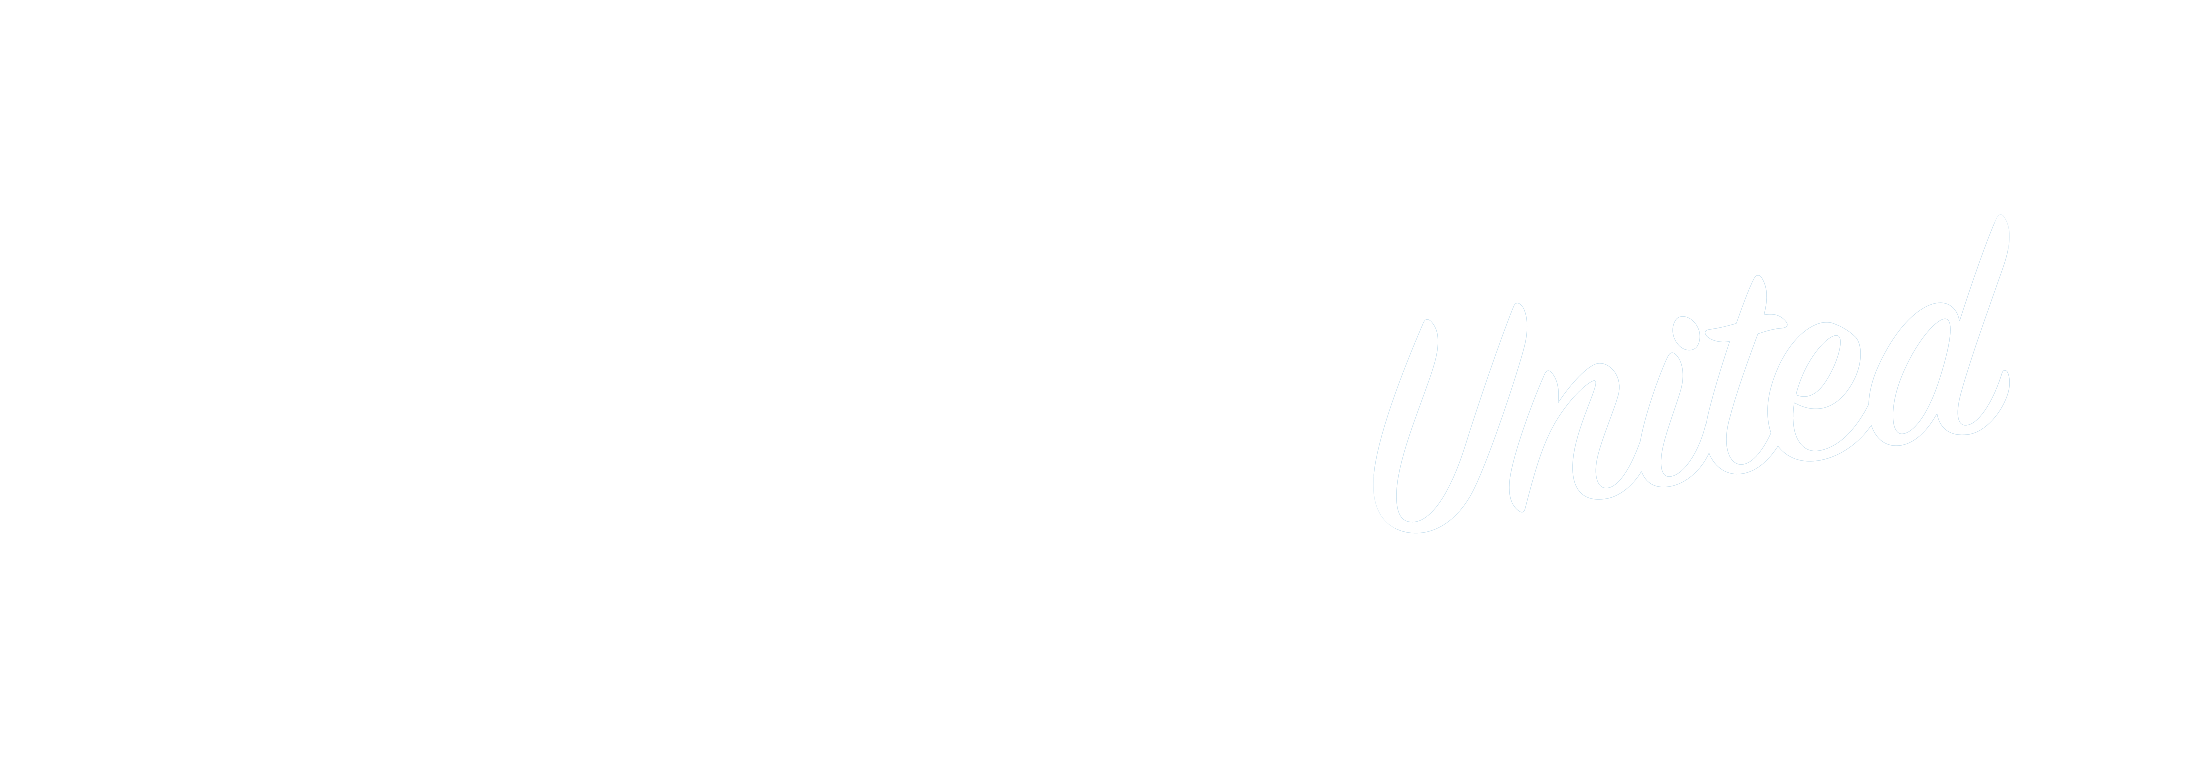 united city church wht 1